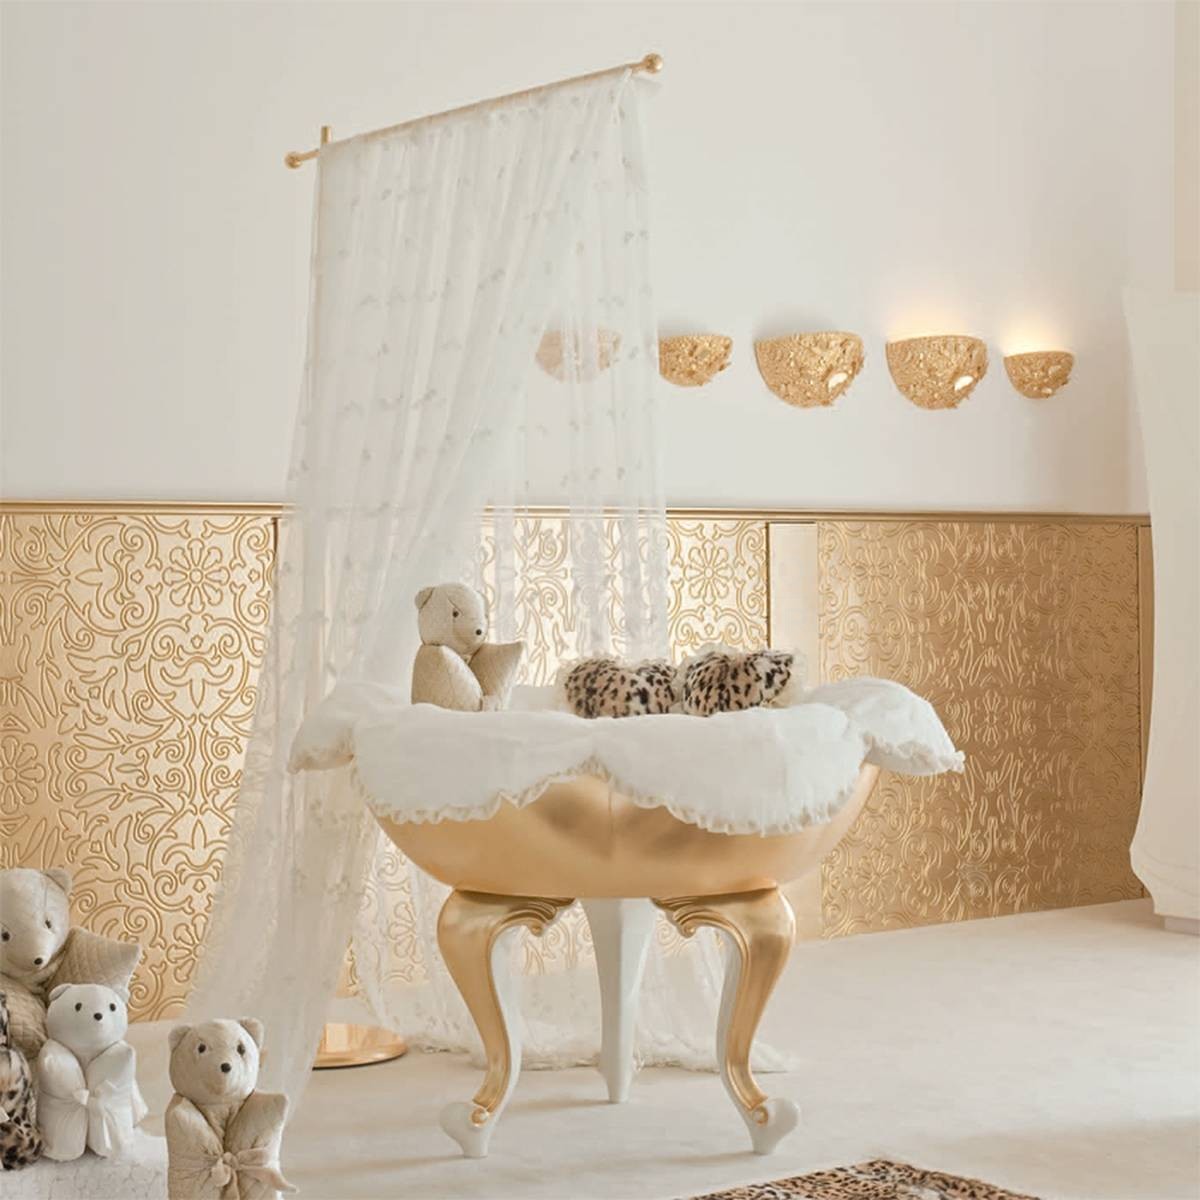 Кровать с балдахином Luxury Bebe SUNNY art.981-BICOLORE из Италии фабрики HALLEY